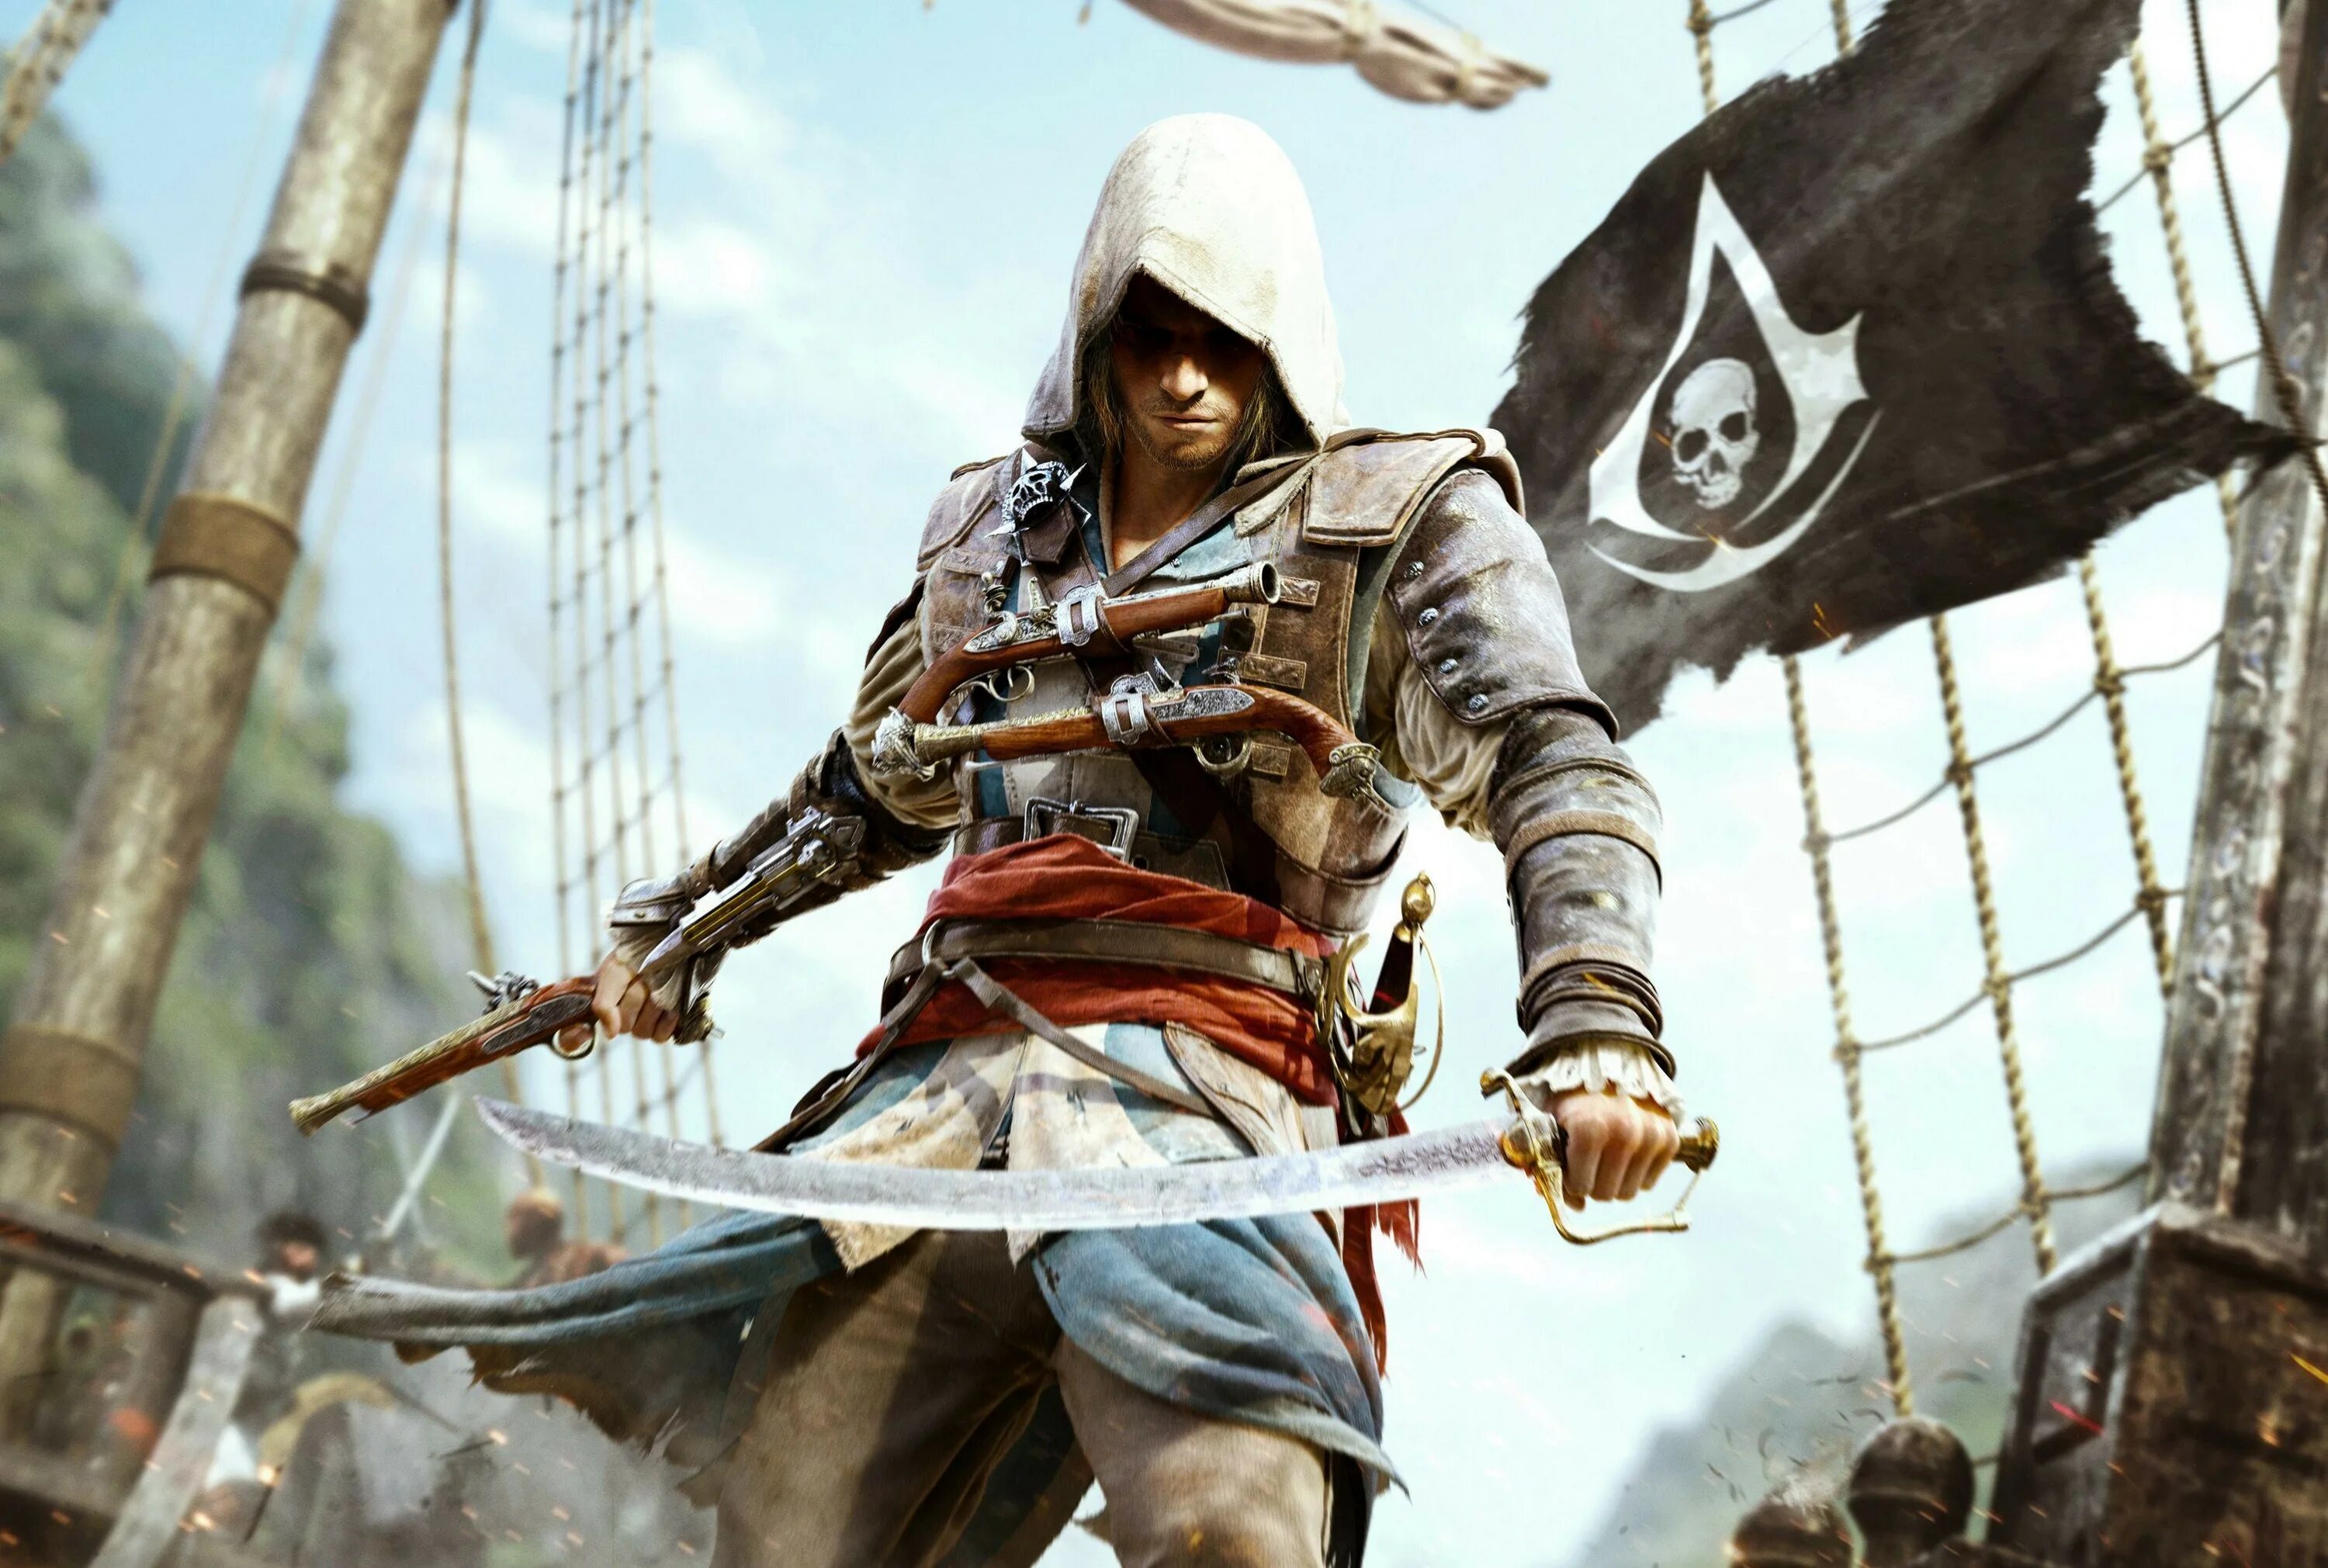 Https wvbotz84dslhvaezzqf0euyhhpeqix8o4tsrqfefuqpi2xfepwdr jpg. Assassin's Creed 4 Black Flag.